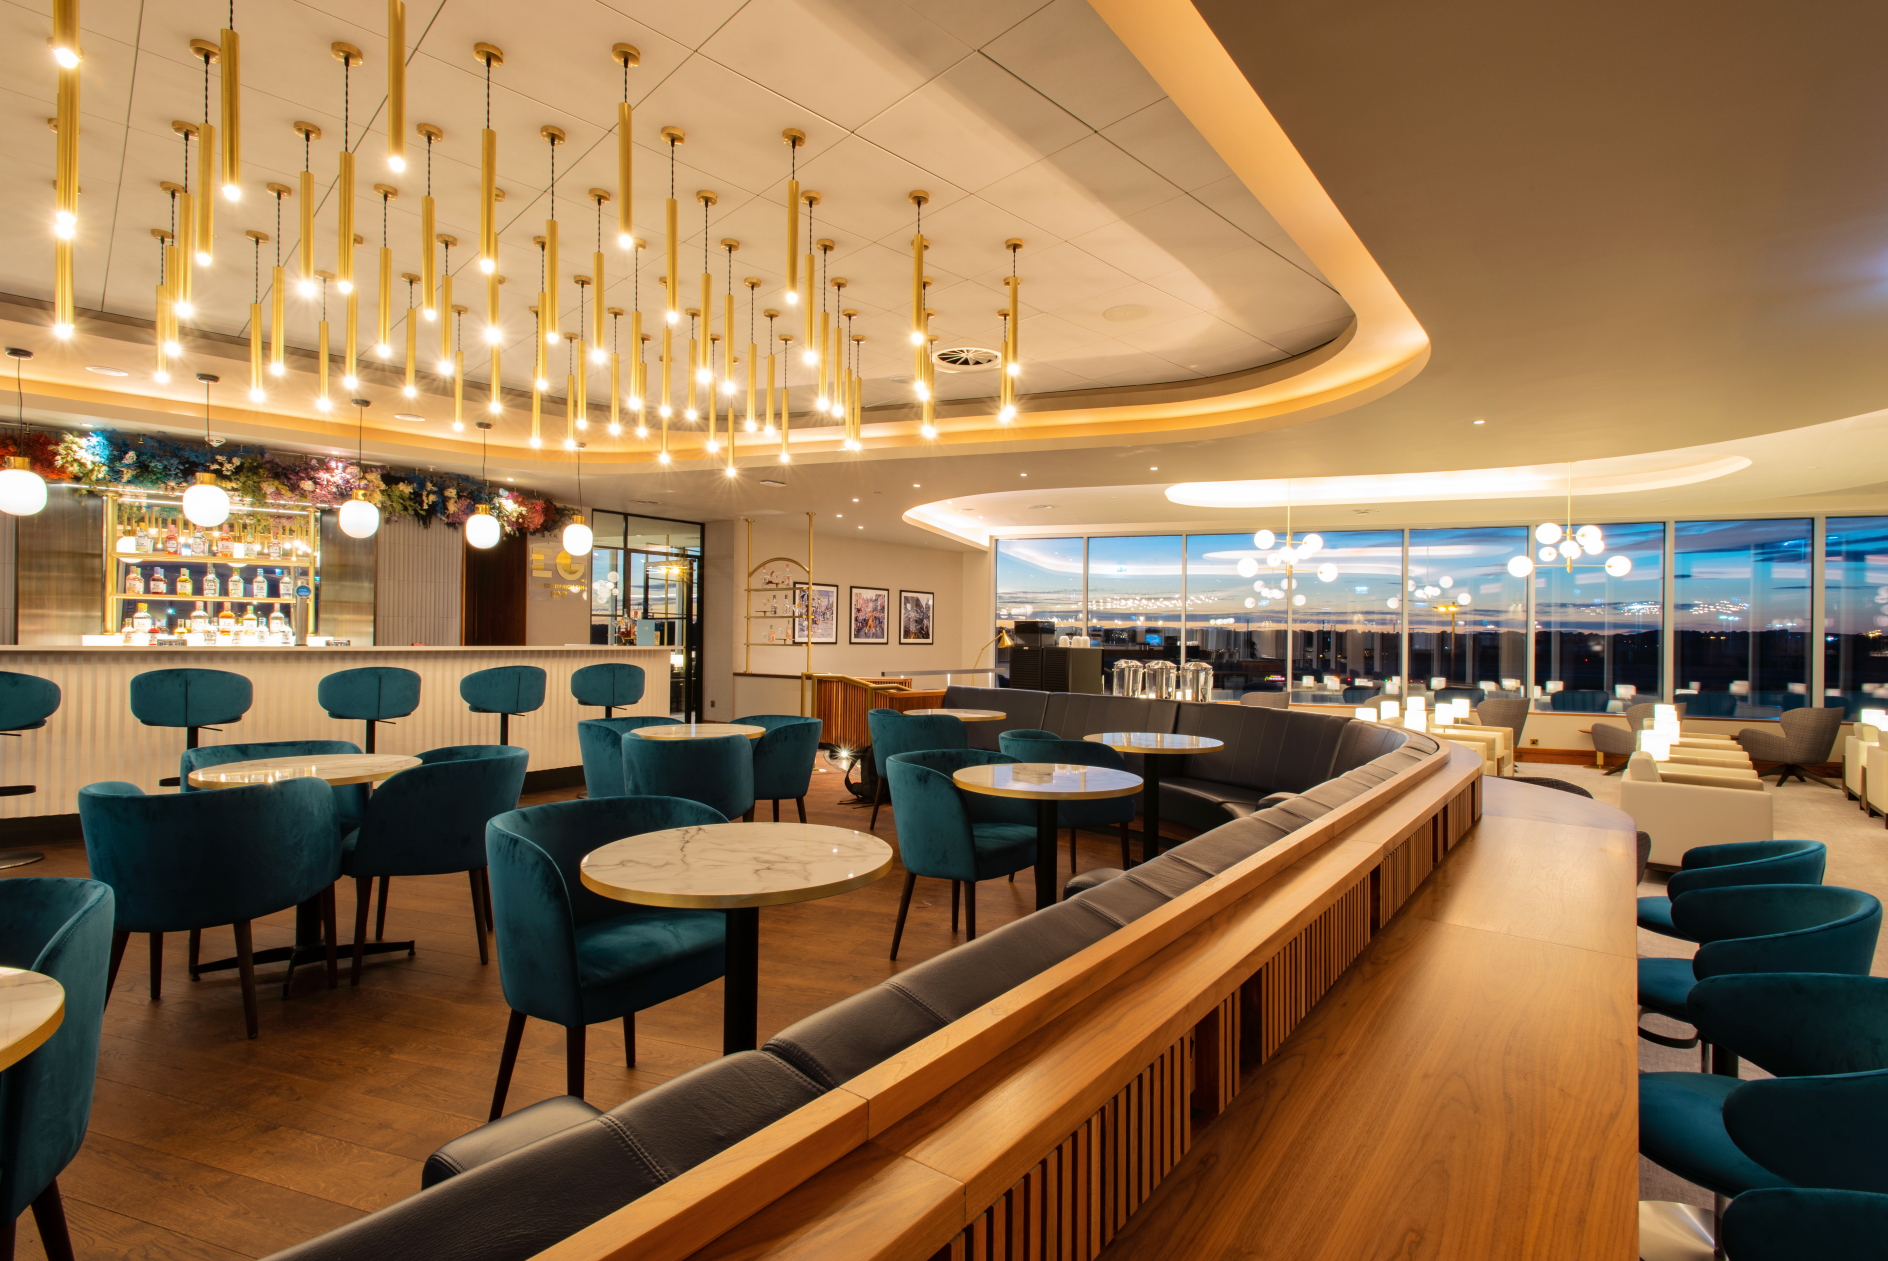 Plaza Premium Lounge at Edinburgh Airport (EDI), Scotland Click to enlarge.